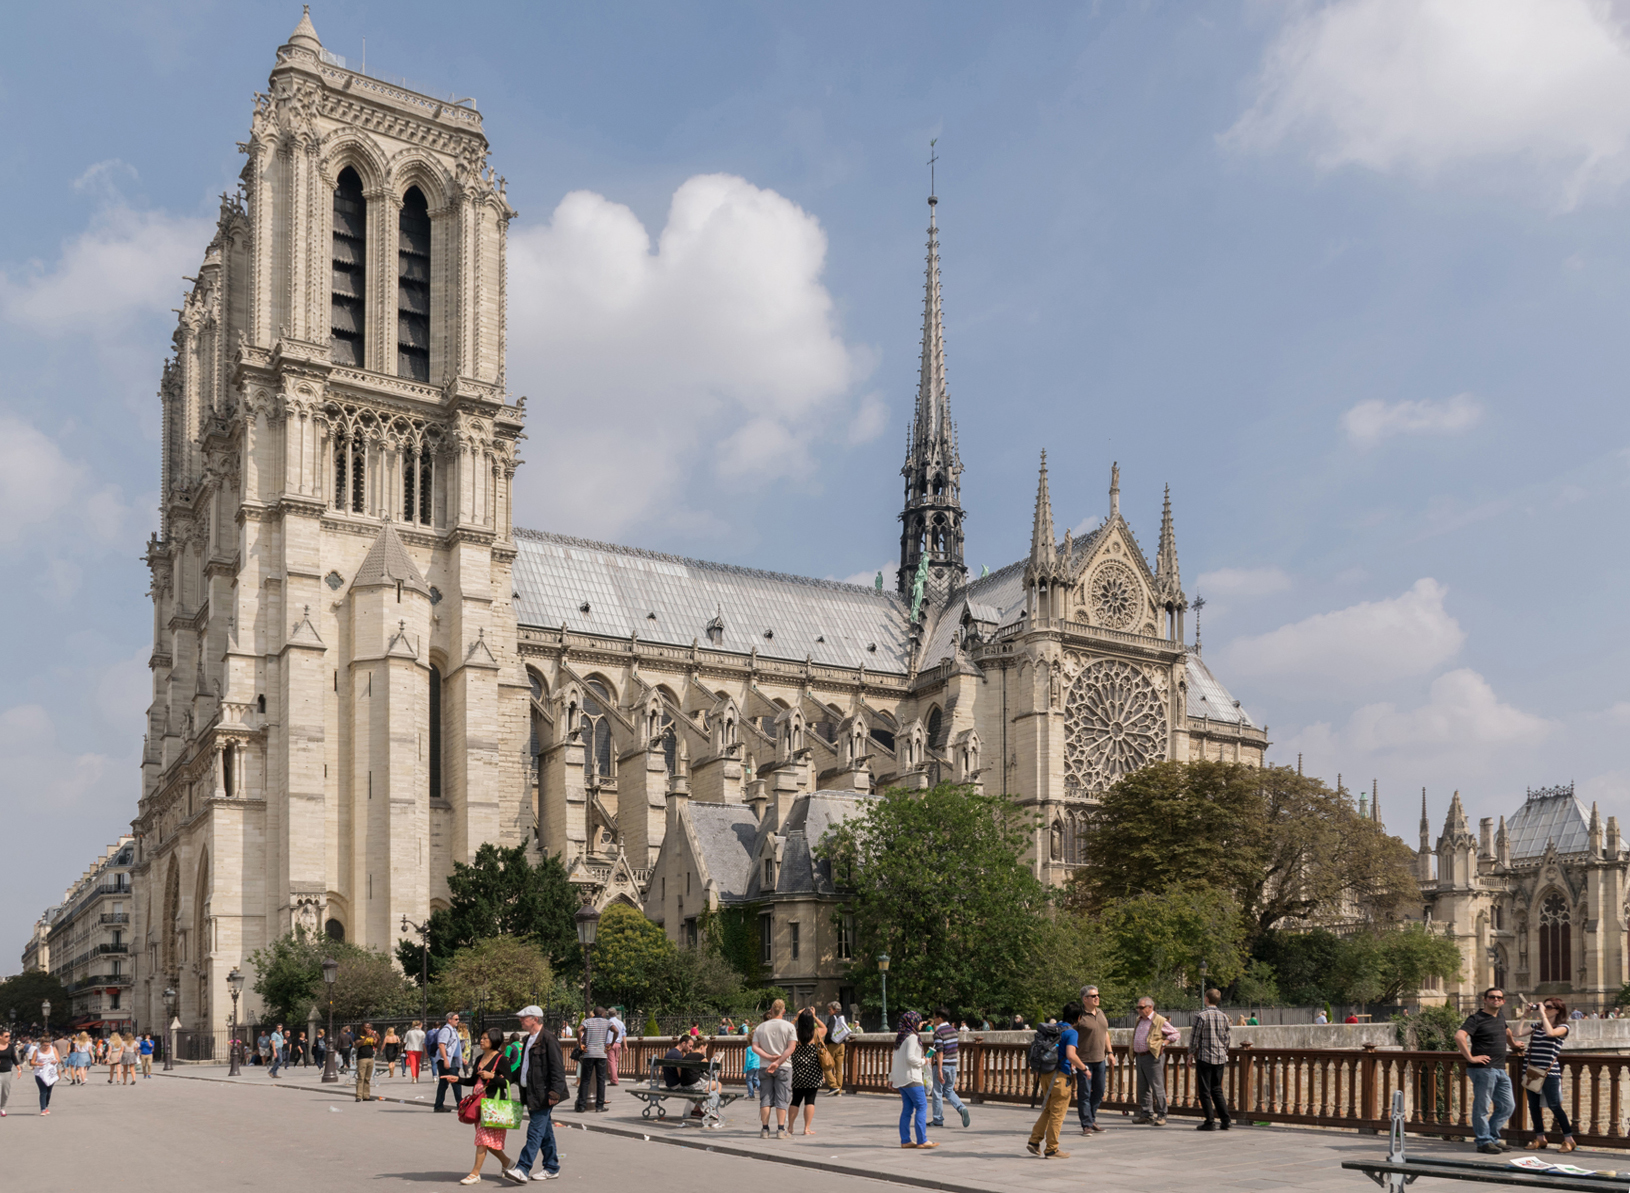 Notre Dame de Paris also known as Notre-Dame Cathedral or simply Notre-Dame